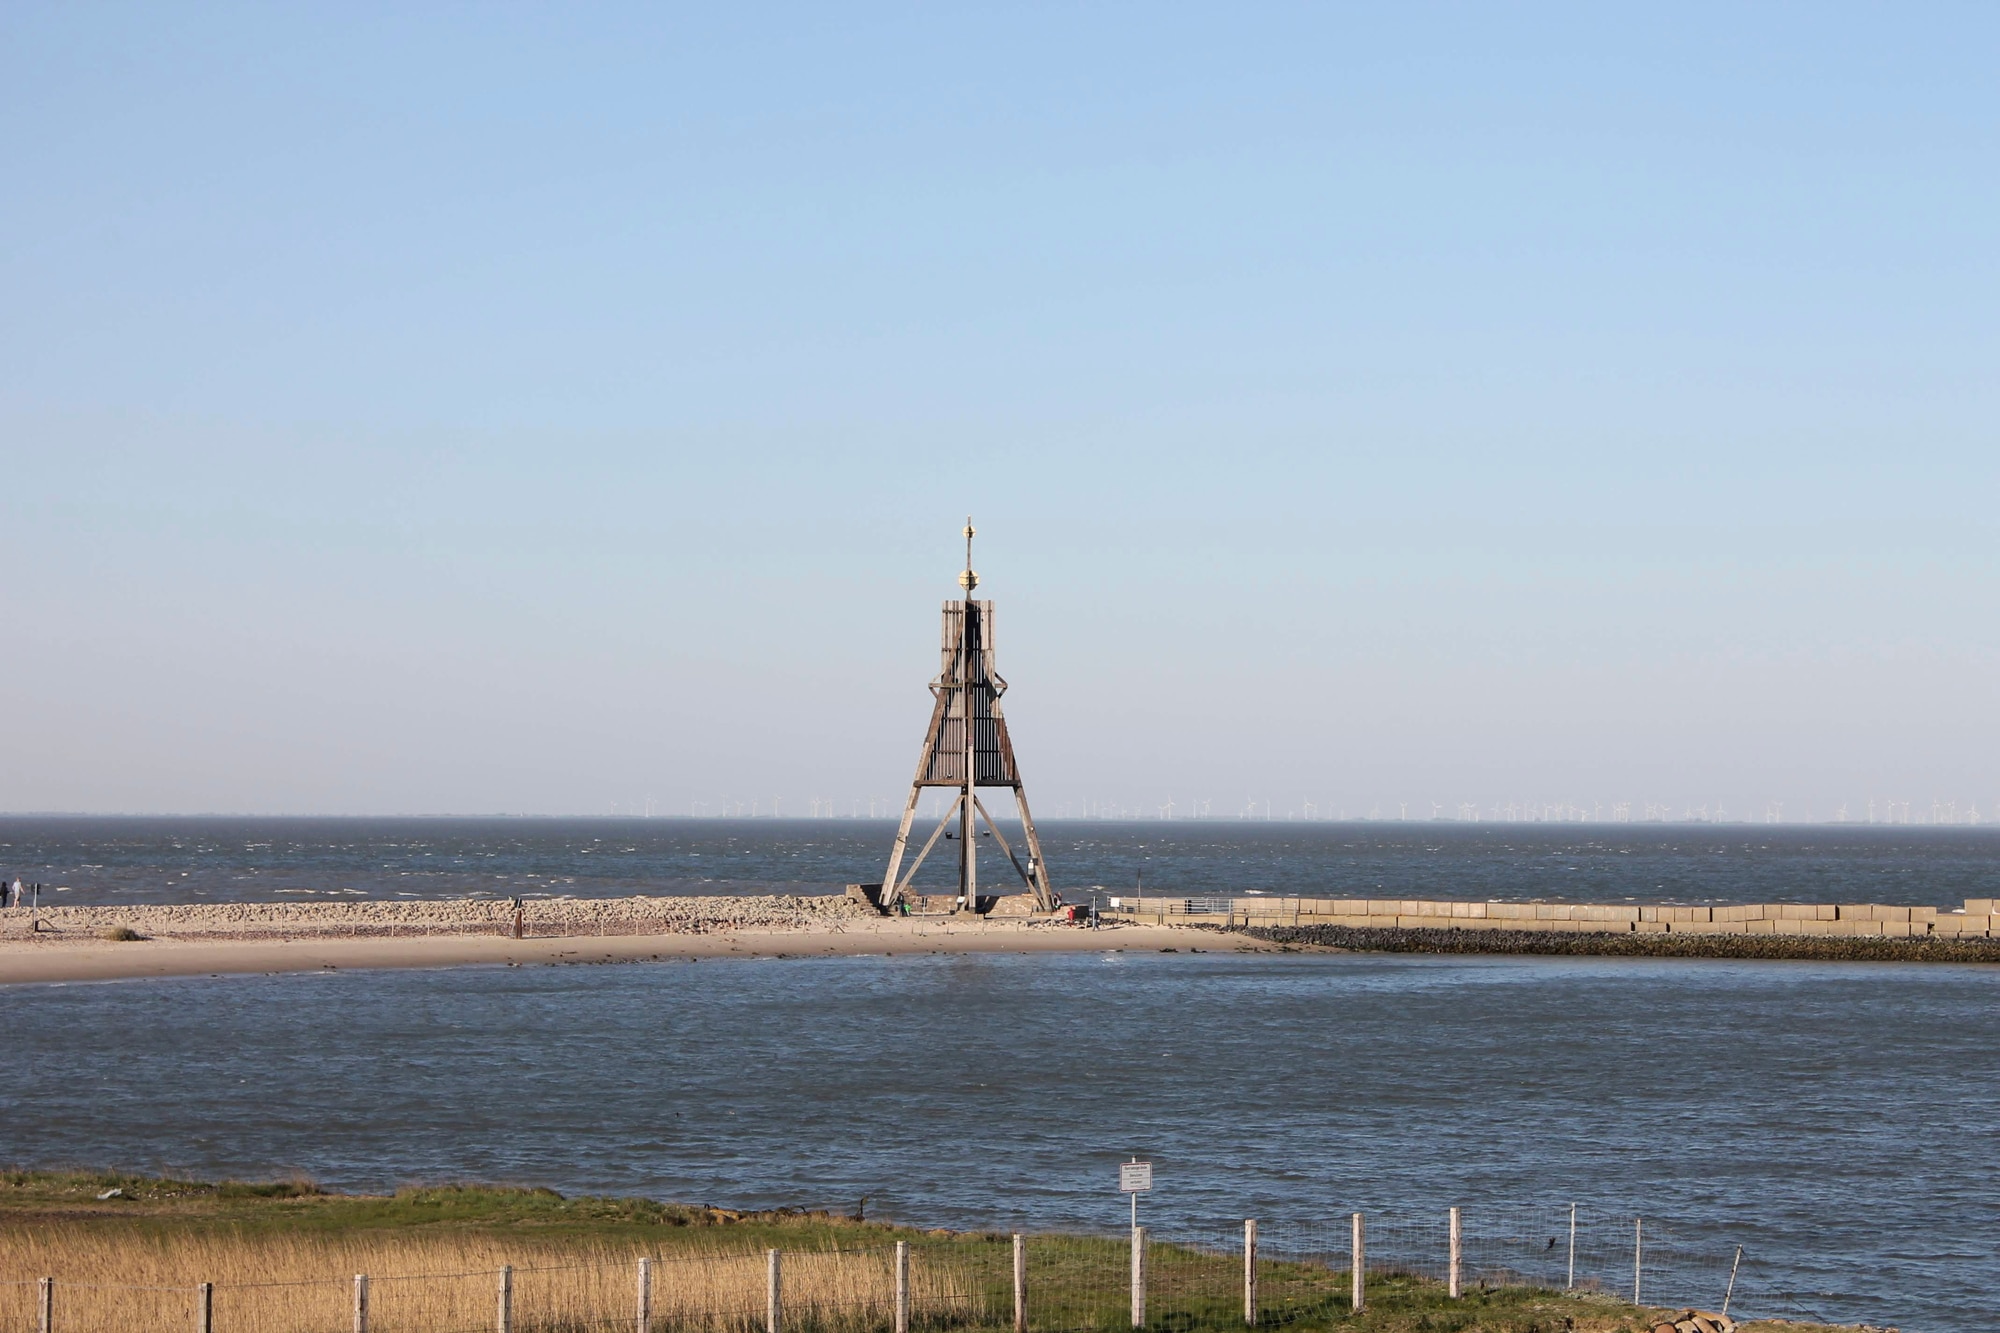 sea marker in Cuxhaven, Germany 